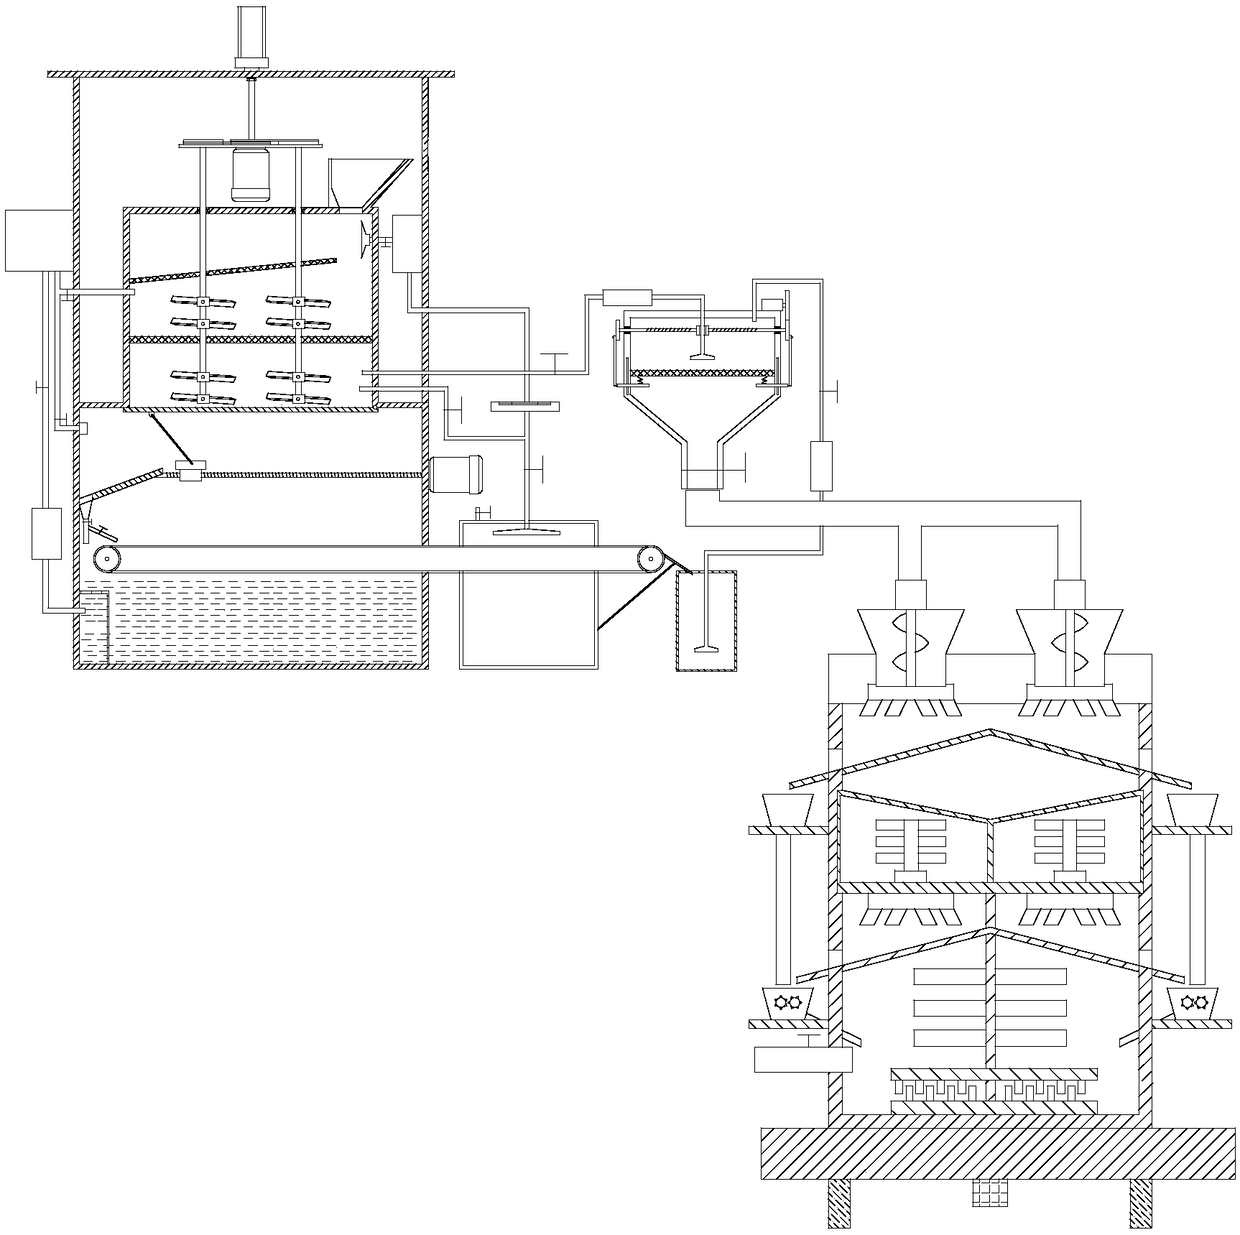 Corn flour dry-mixing mechanism